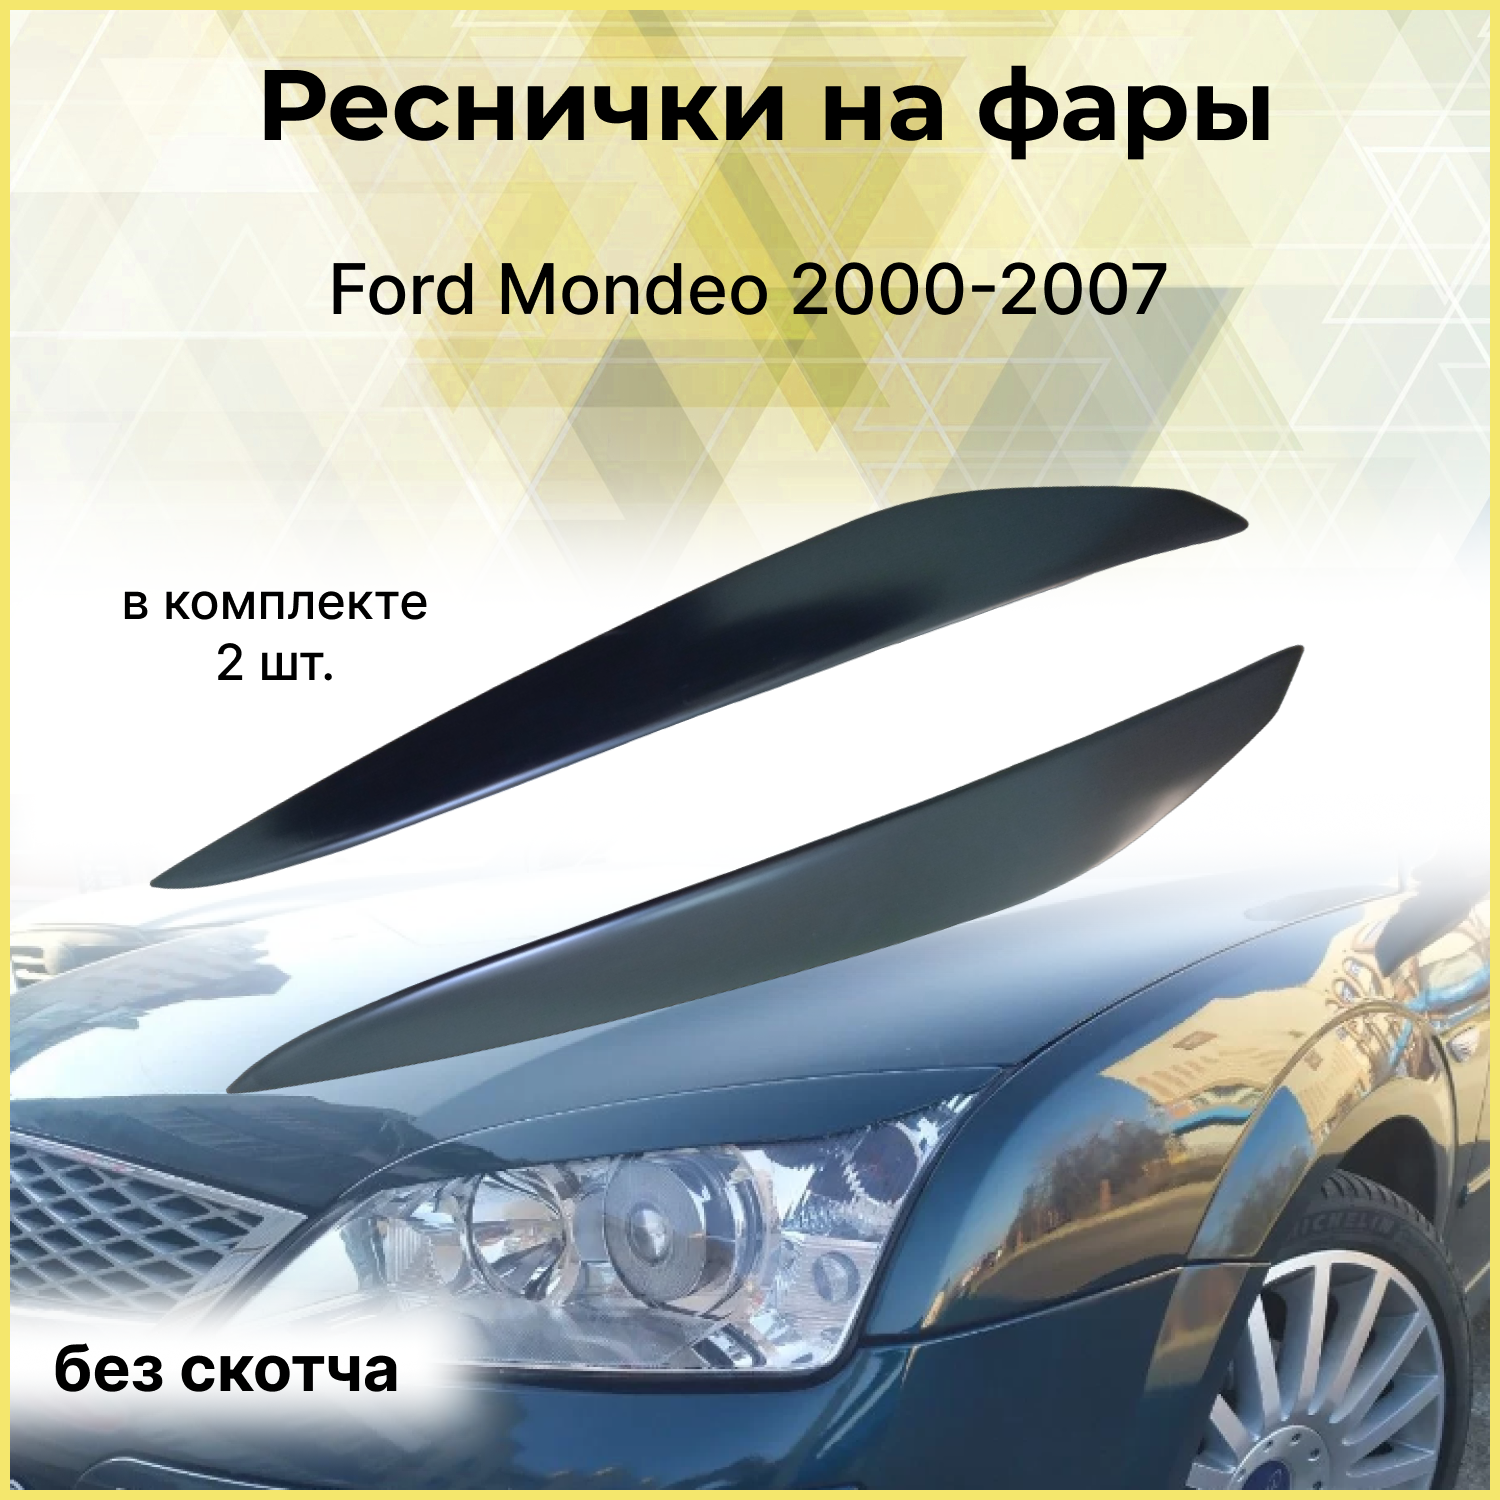 Реснички на фары для Ford Mondeo 2000-2007